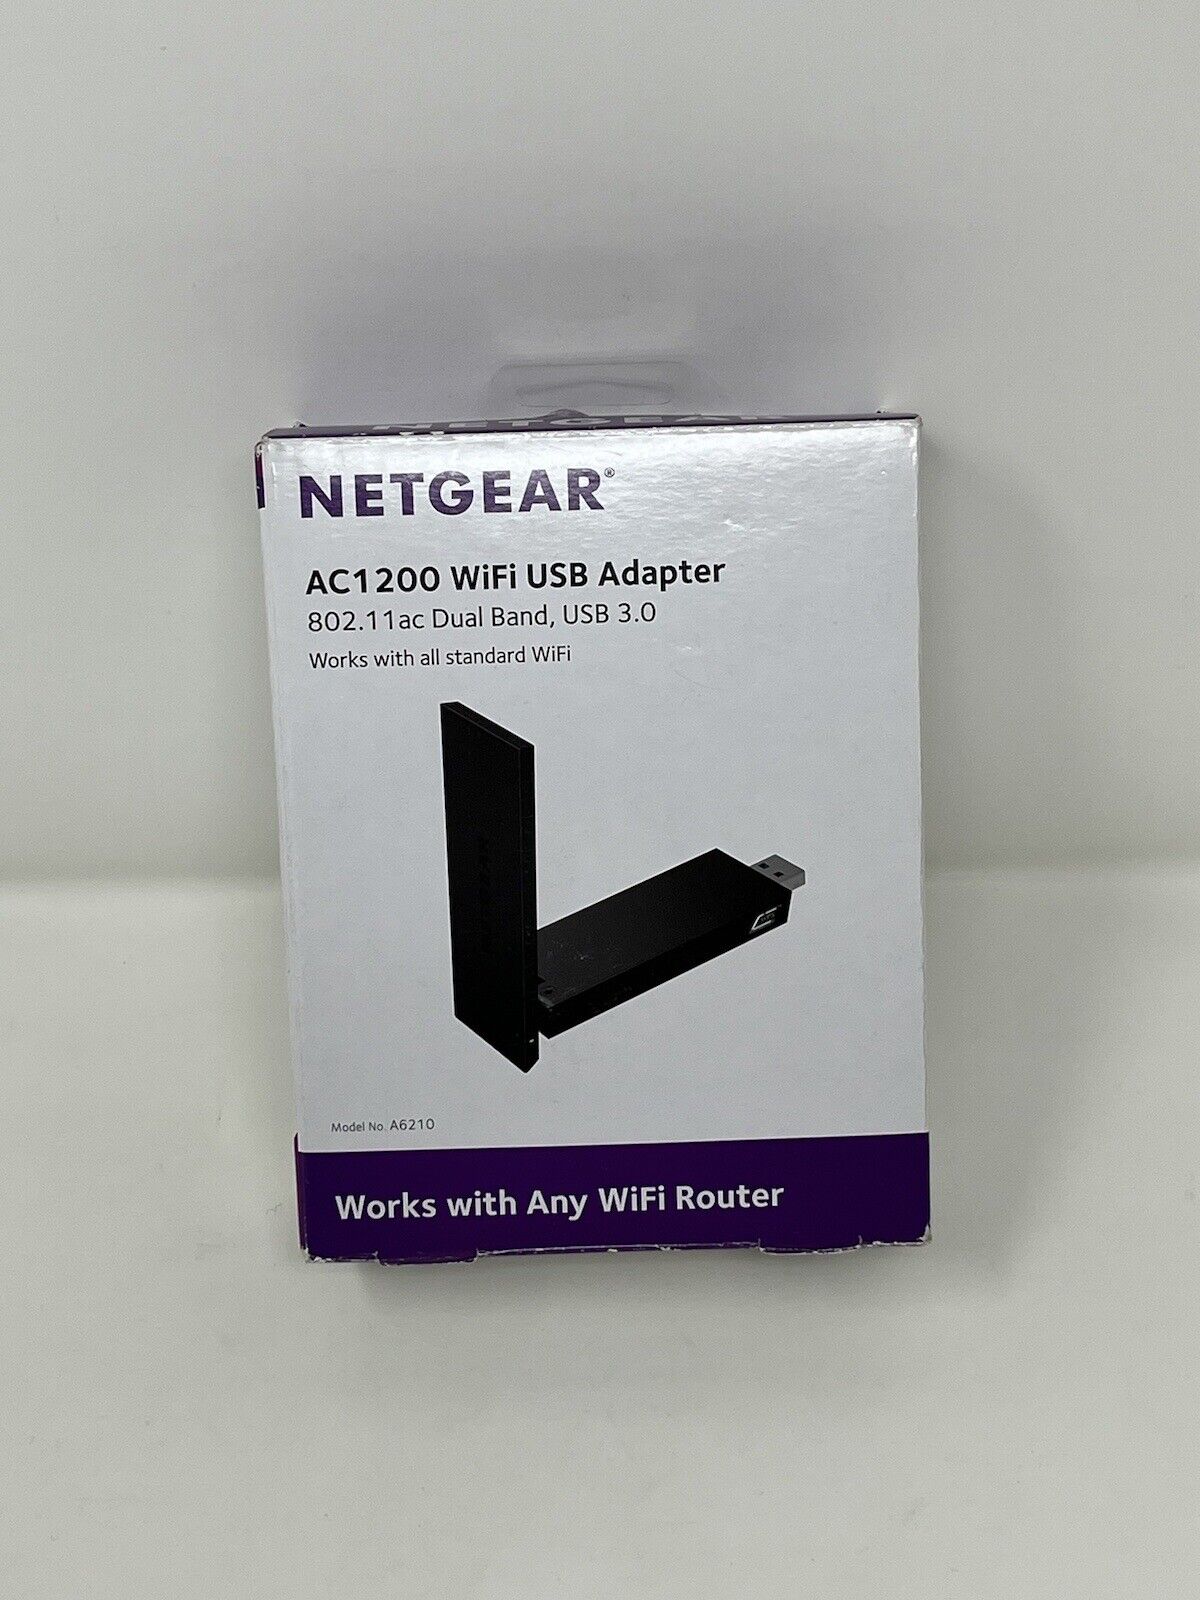 NETGEAR AC1200 WiFi USB Adapter - USB 2.0 Dual Band, Compatible with Windows 10